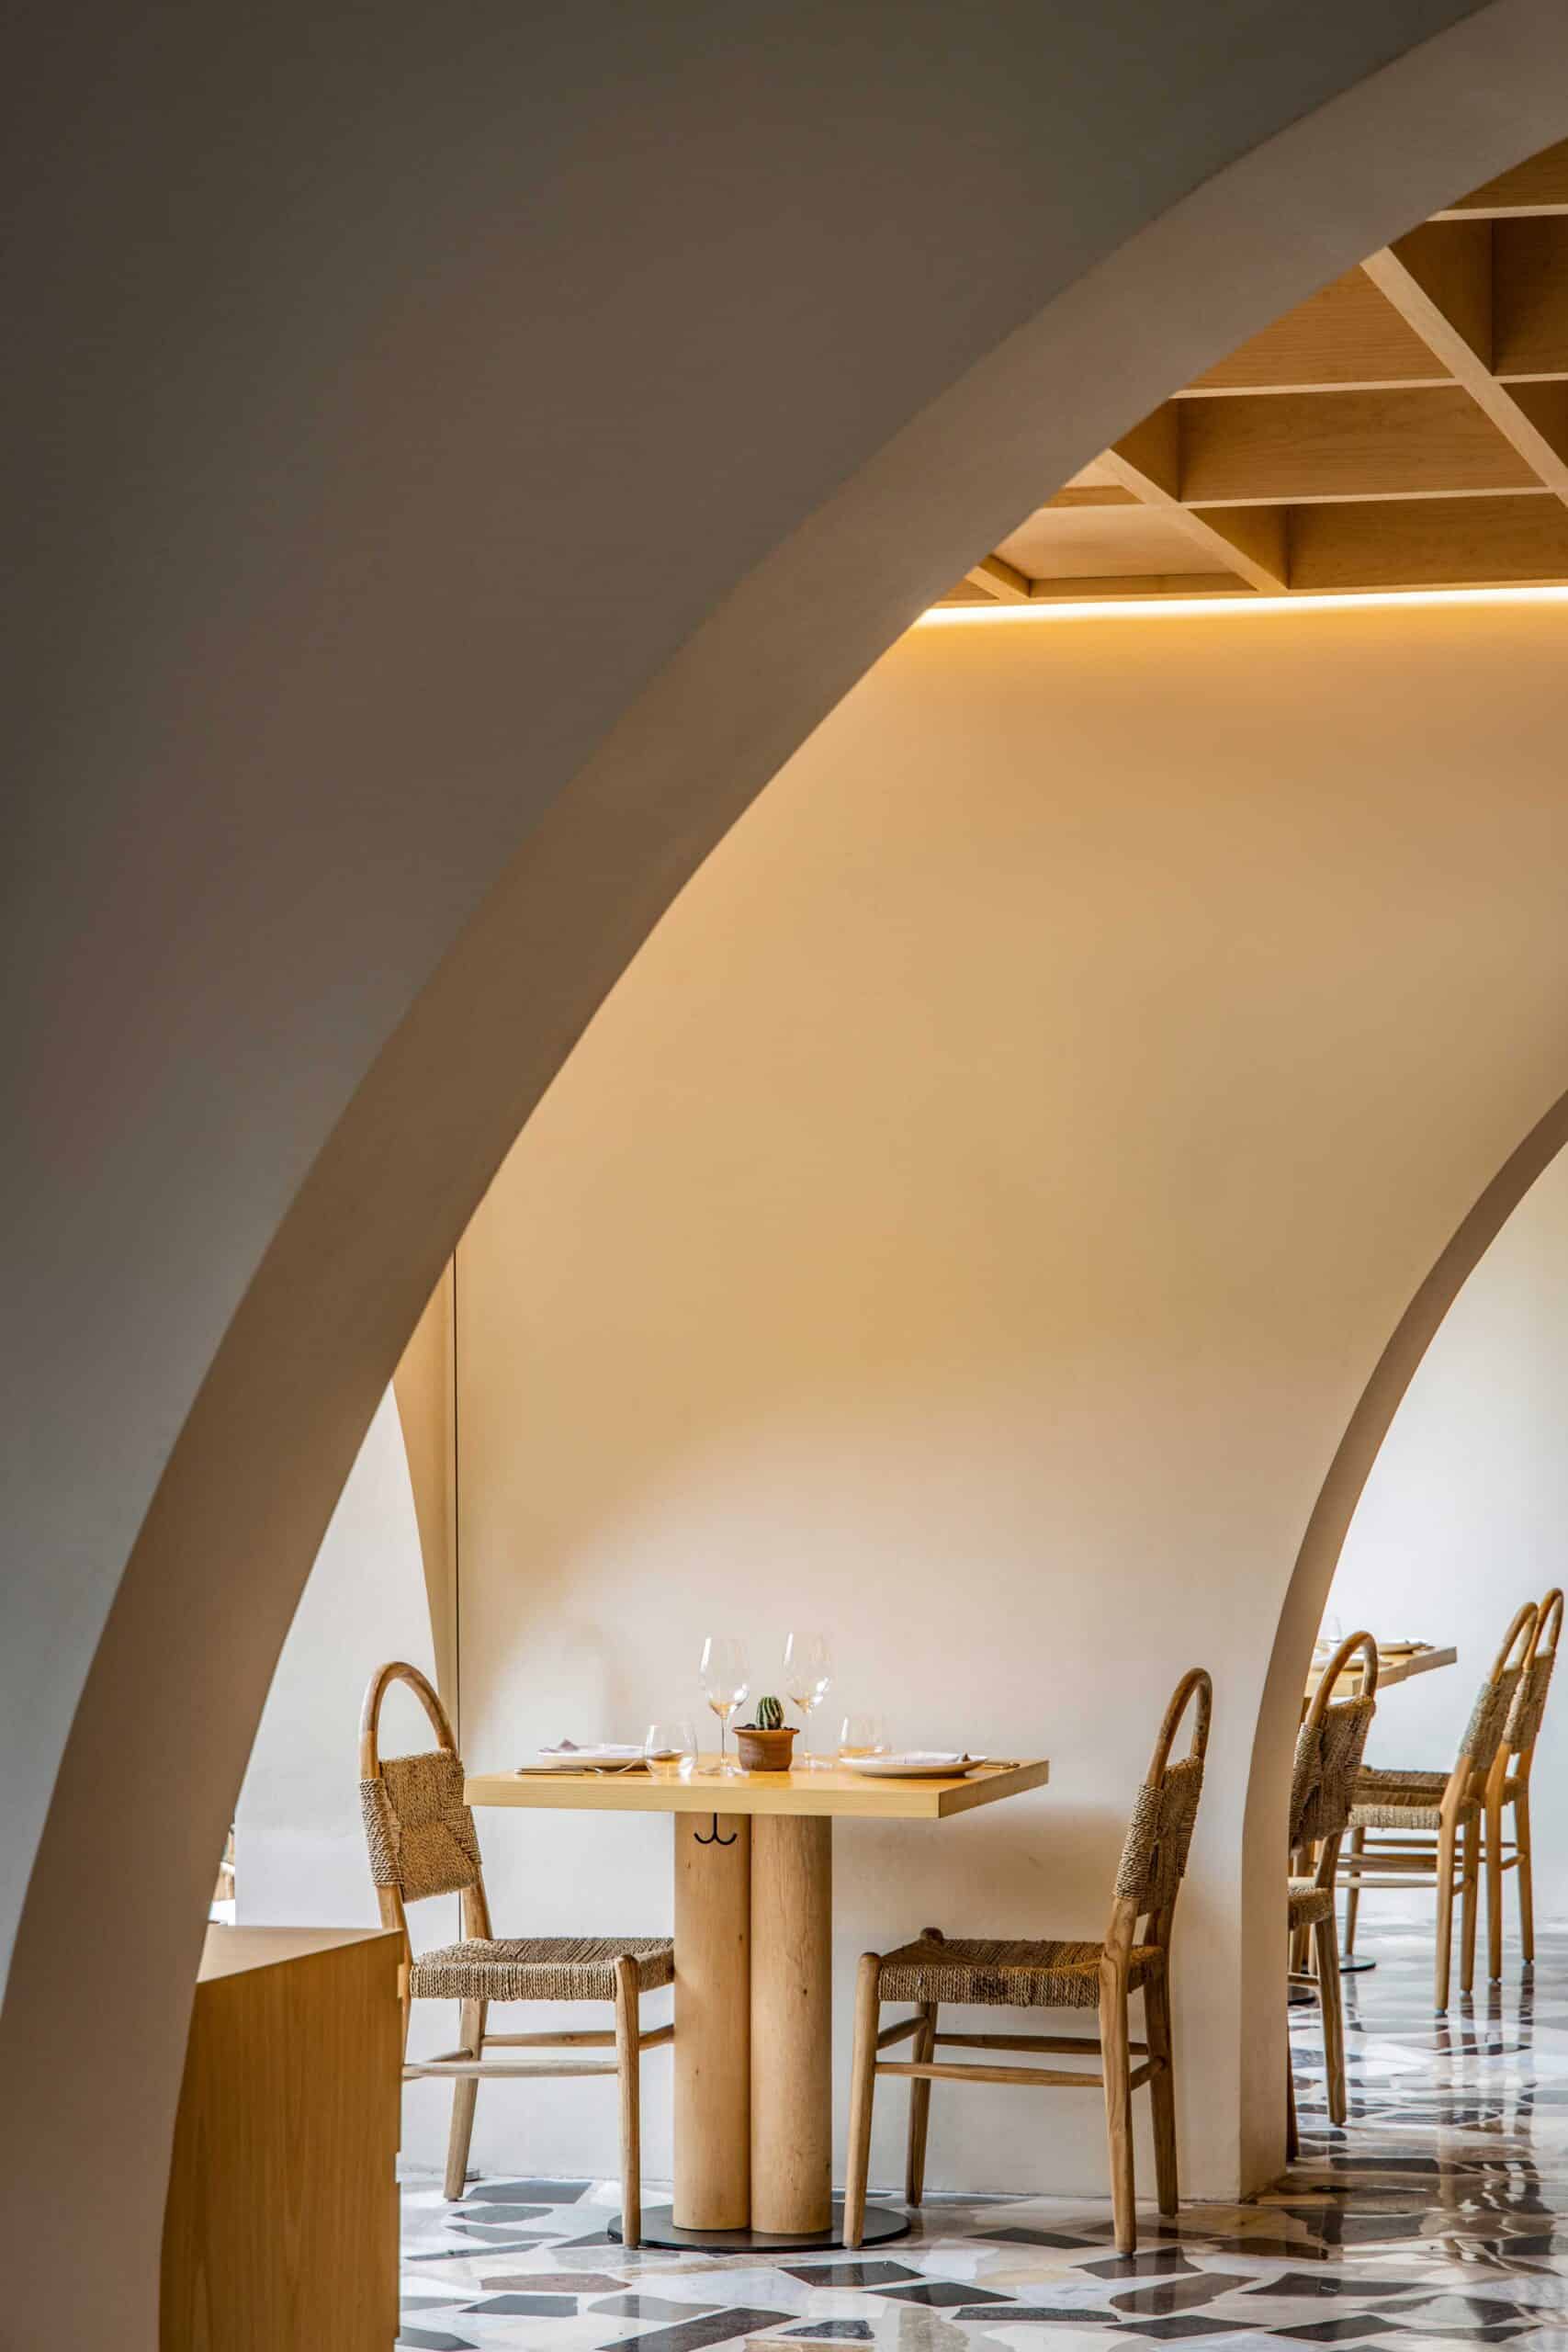 Restaurant Design - Luma Bali - Interior Design - Architecture - Architect Bali - Seating